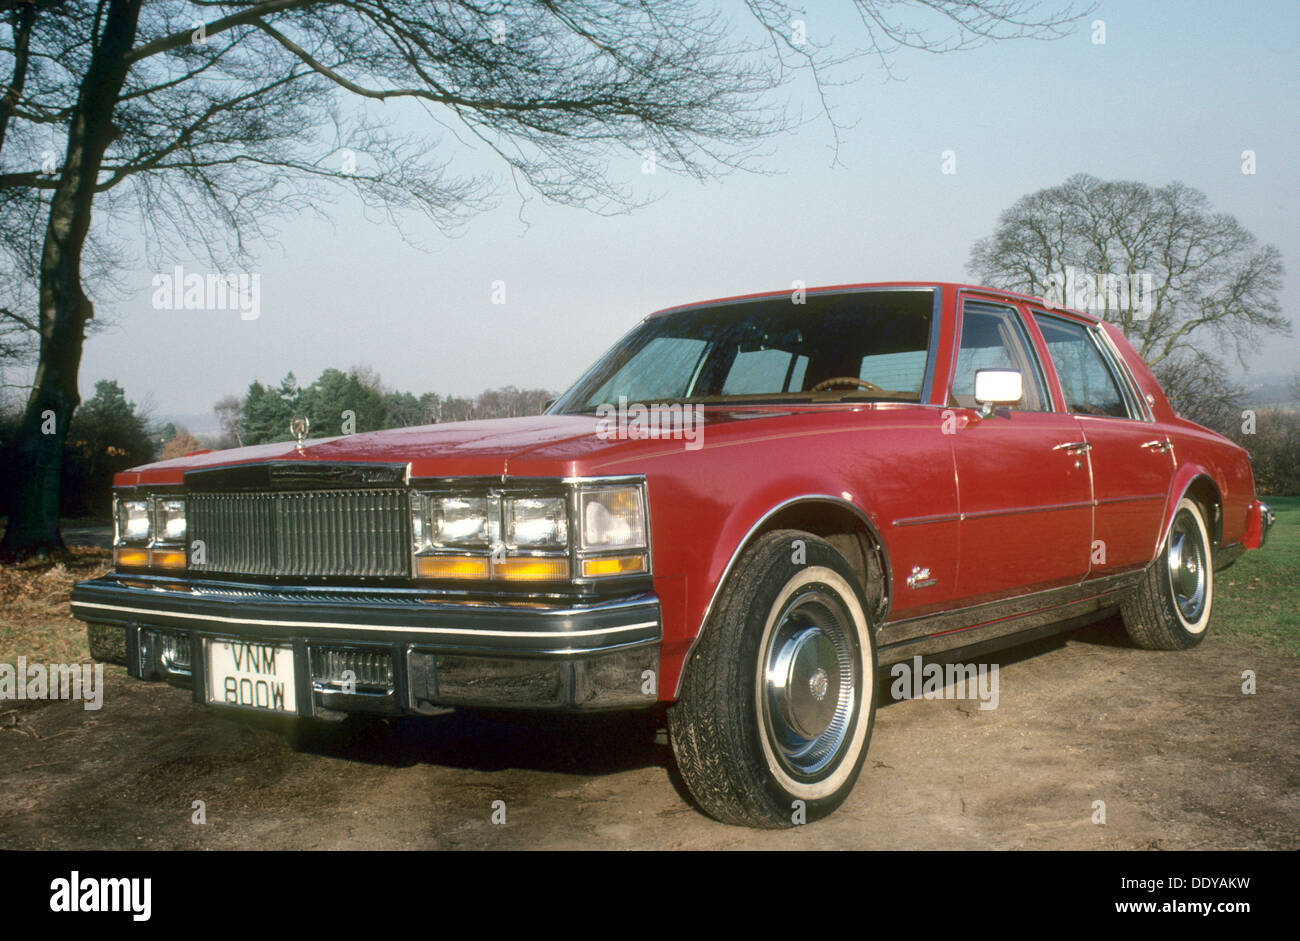 1982 Cadillac Seville Foto de stock